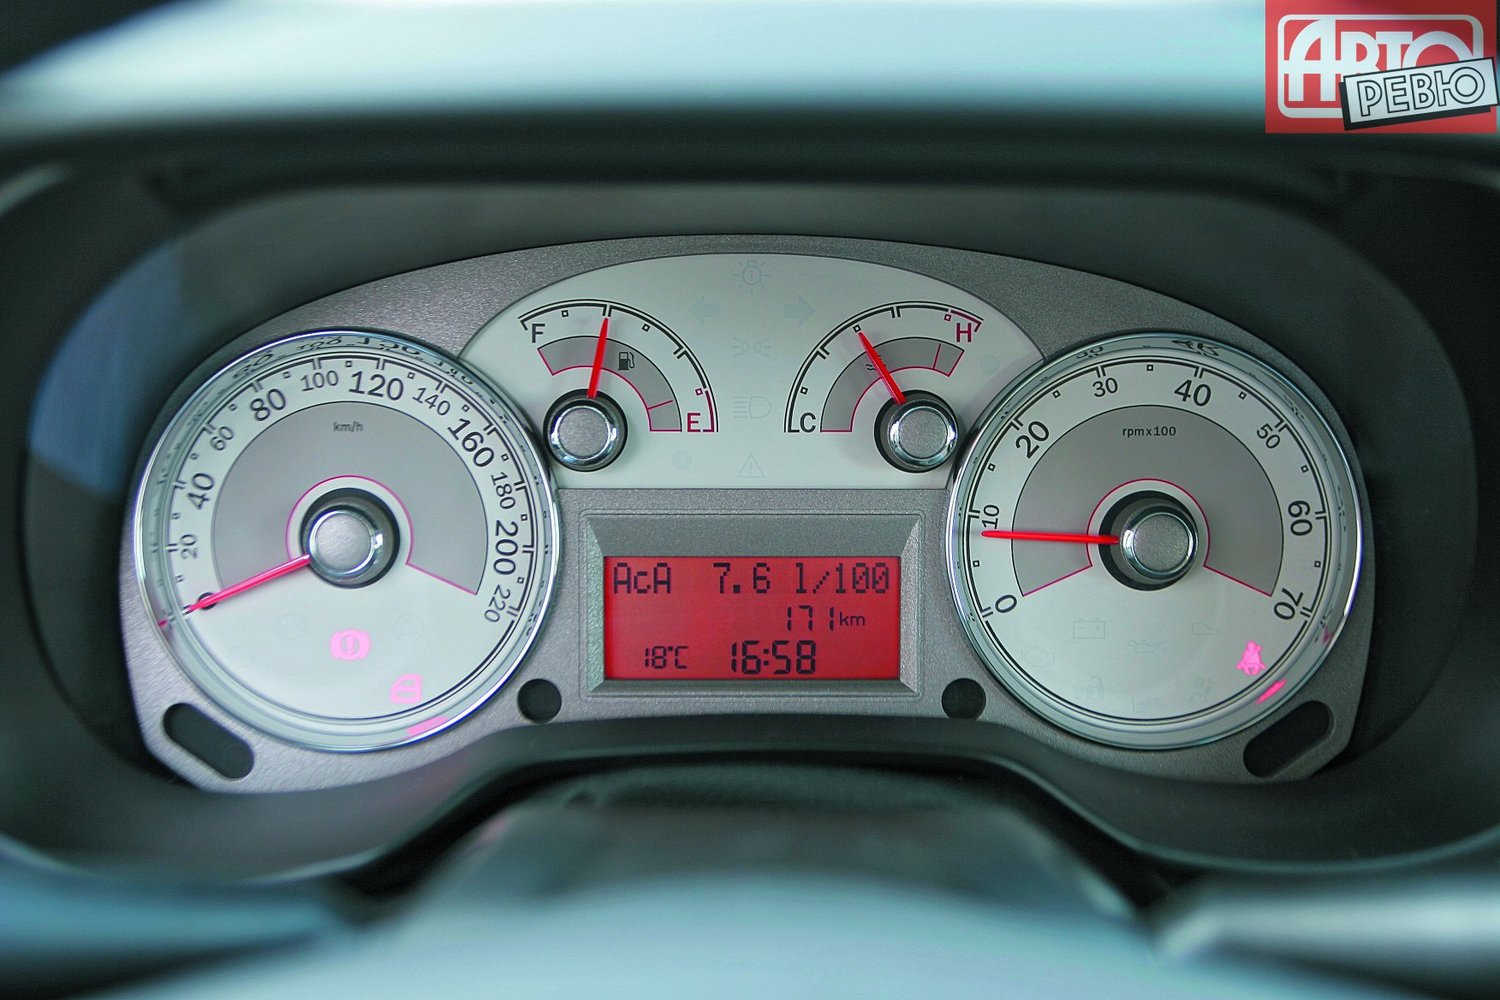 седан Fiat Linea 2006 - 2012г выпуска модификация 1.4 MT (90 л.с.)